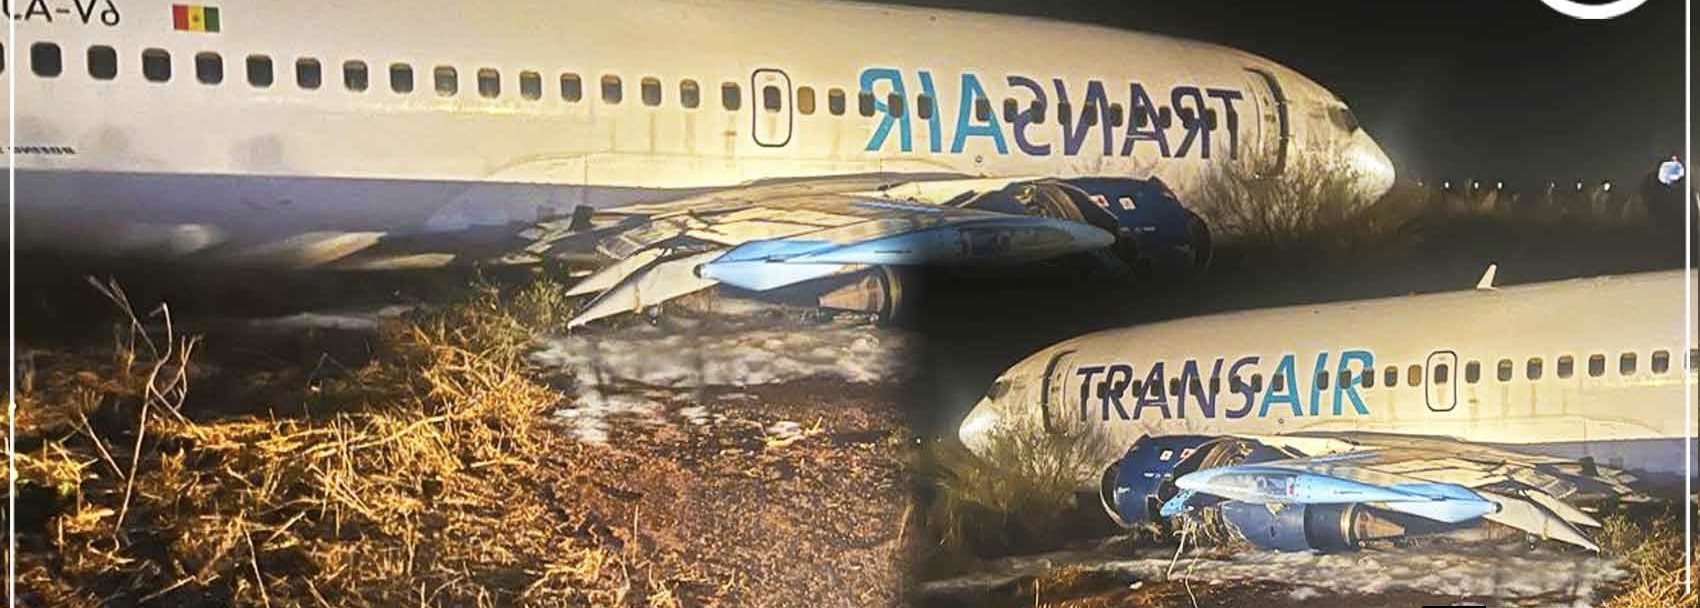 Senegal: Plane accident at Blaise Diagne International Airport under investigation